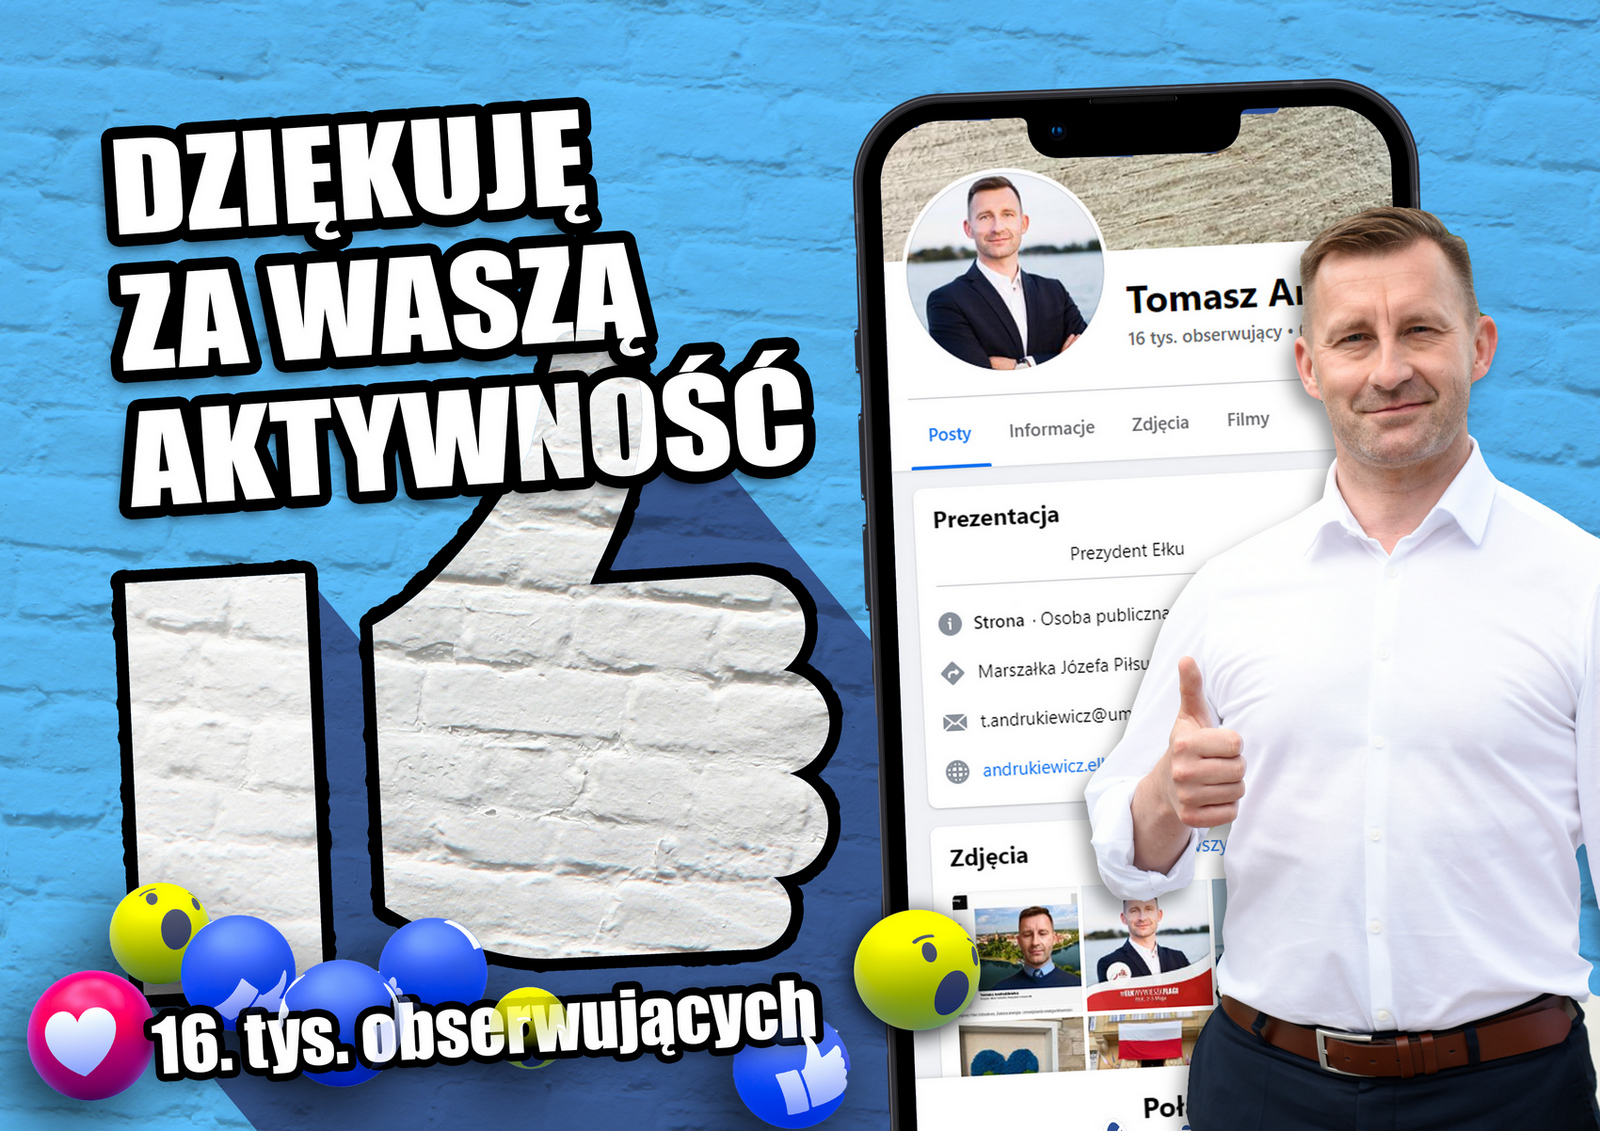 President of Ełk among the 10 most popular presidents in social media